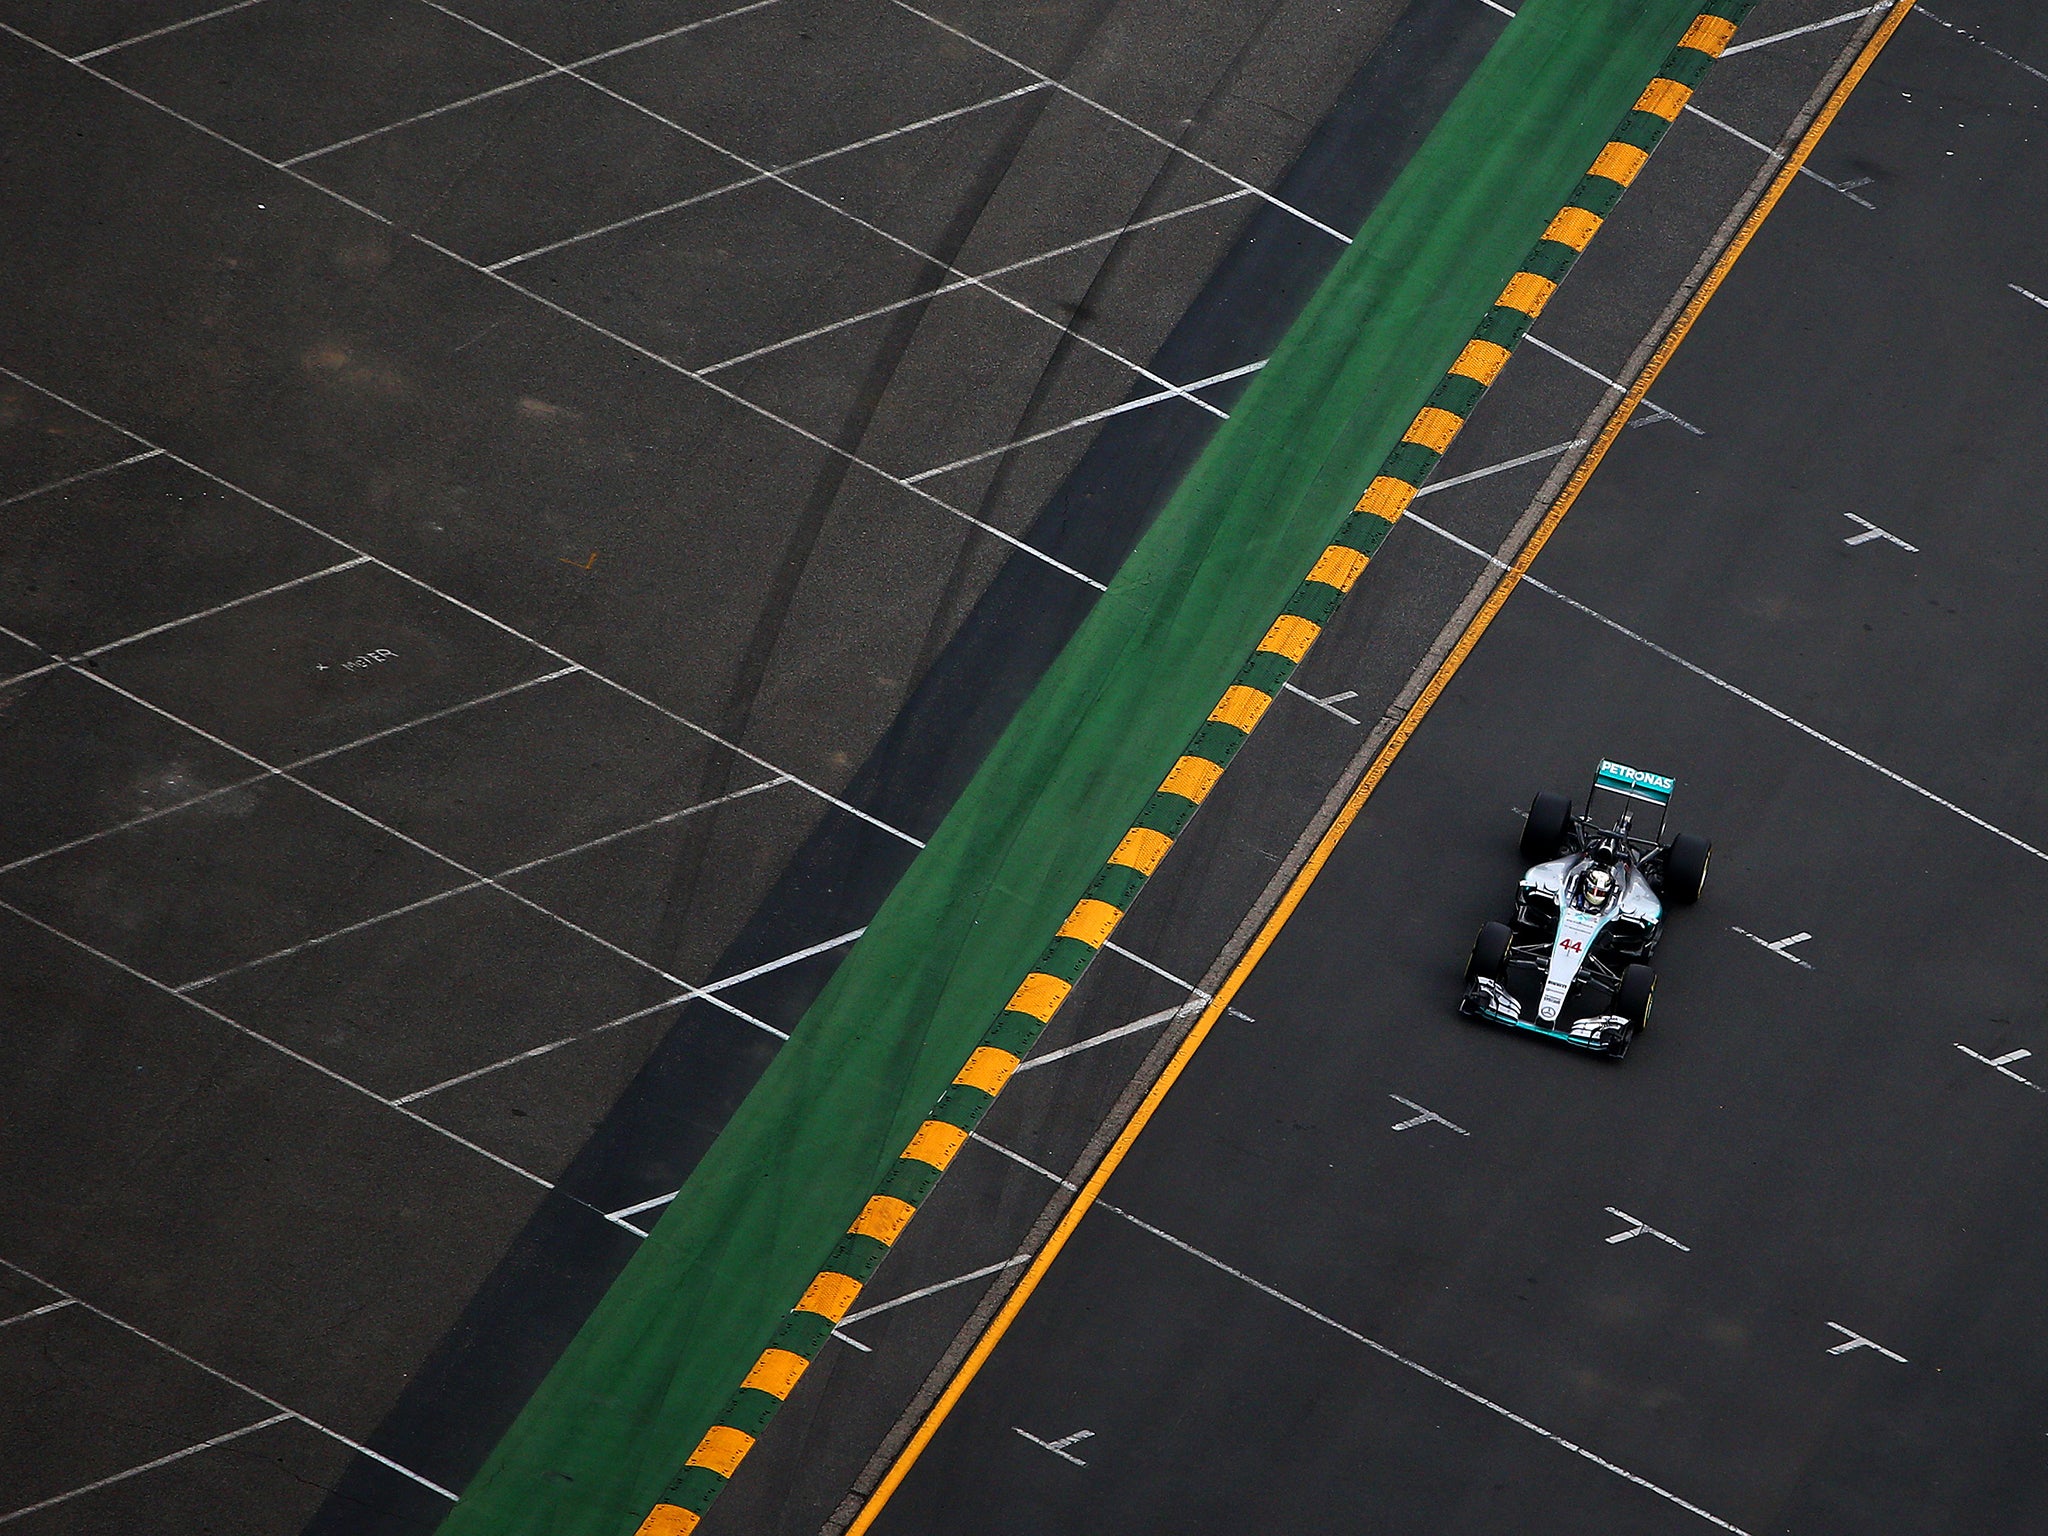 Lewis Hamilton at the Australian Grand Prix